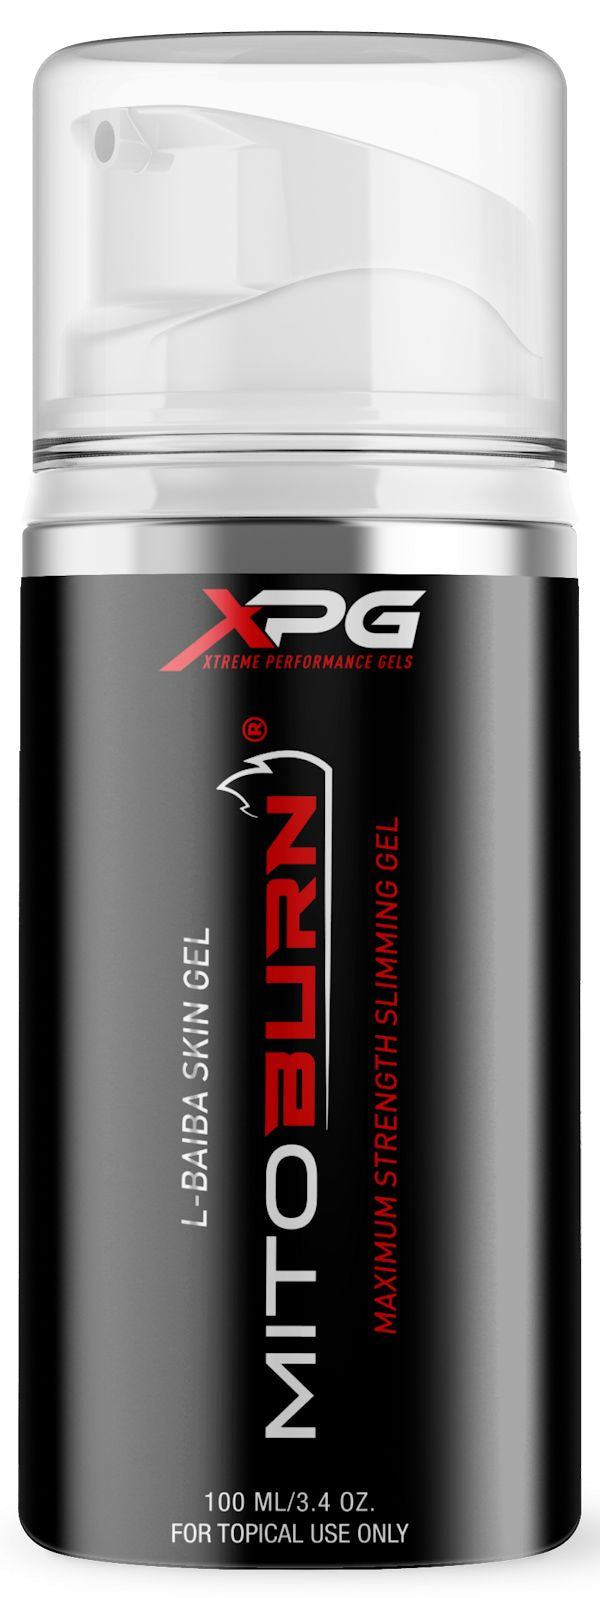 Xtreme Performance Gels XPG MitoBurn Gel Maximum Strength|Lowcostvitamin.com